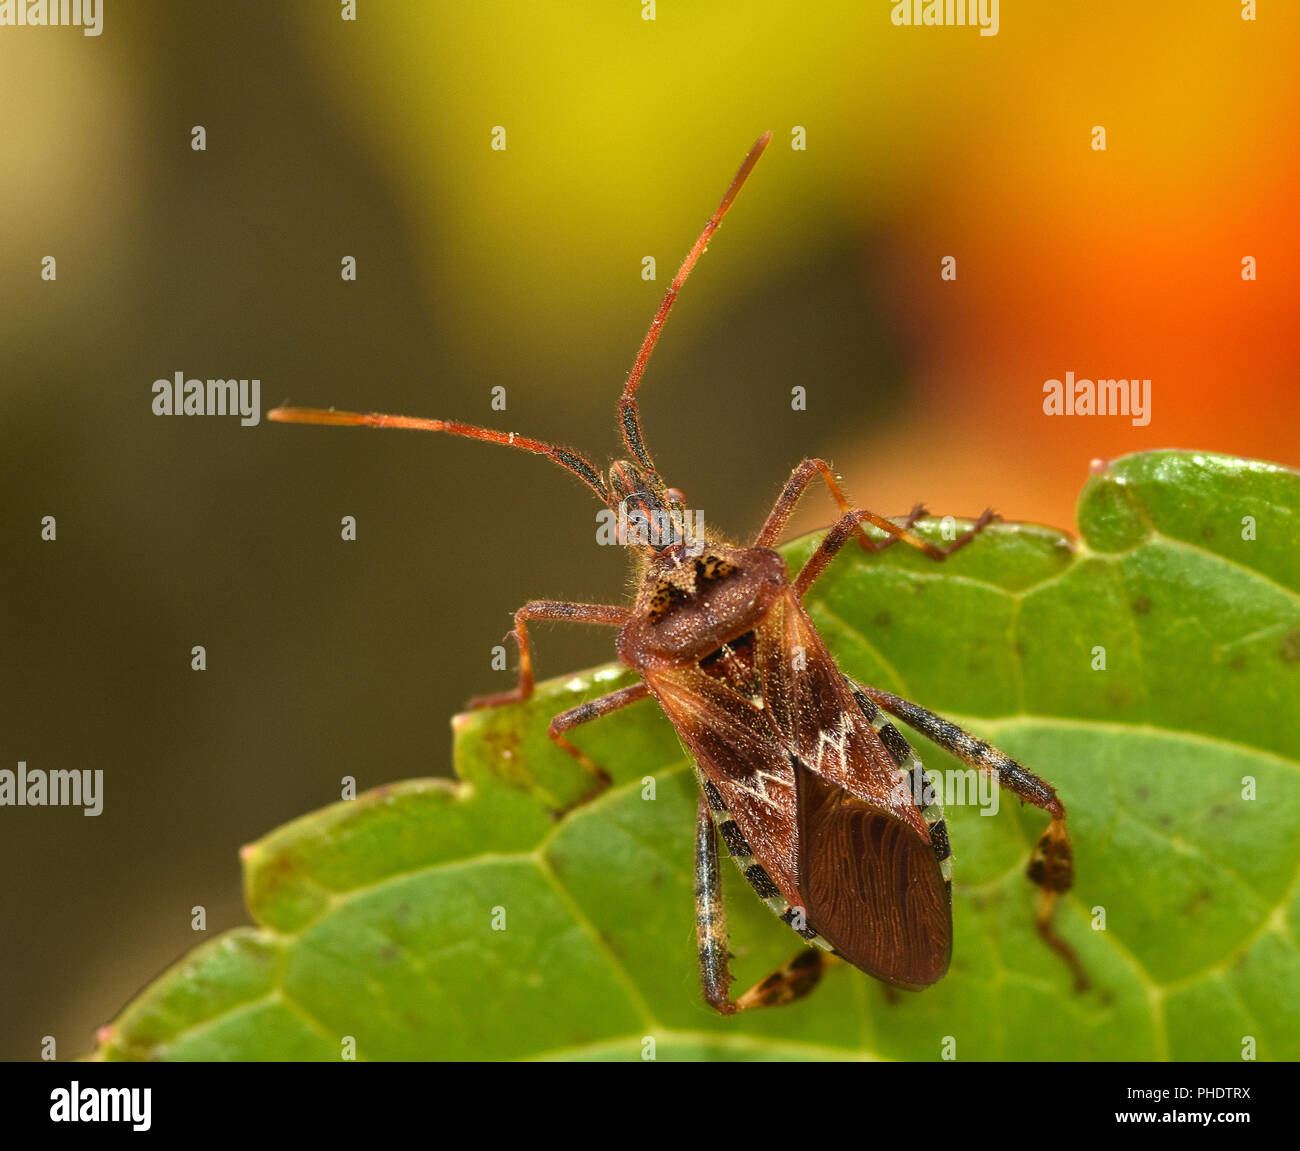 Western sementi di conifere bug; Foto Stock